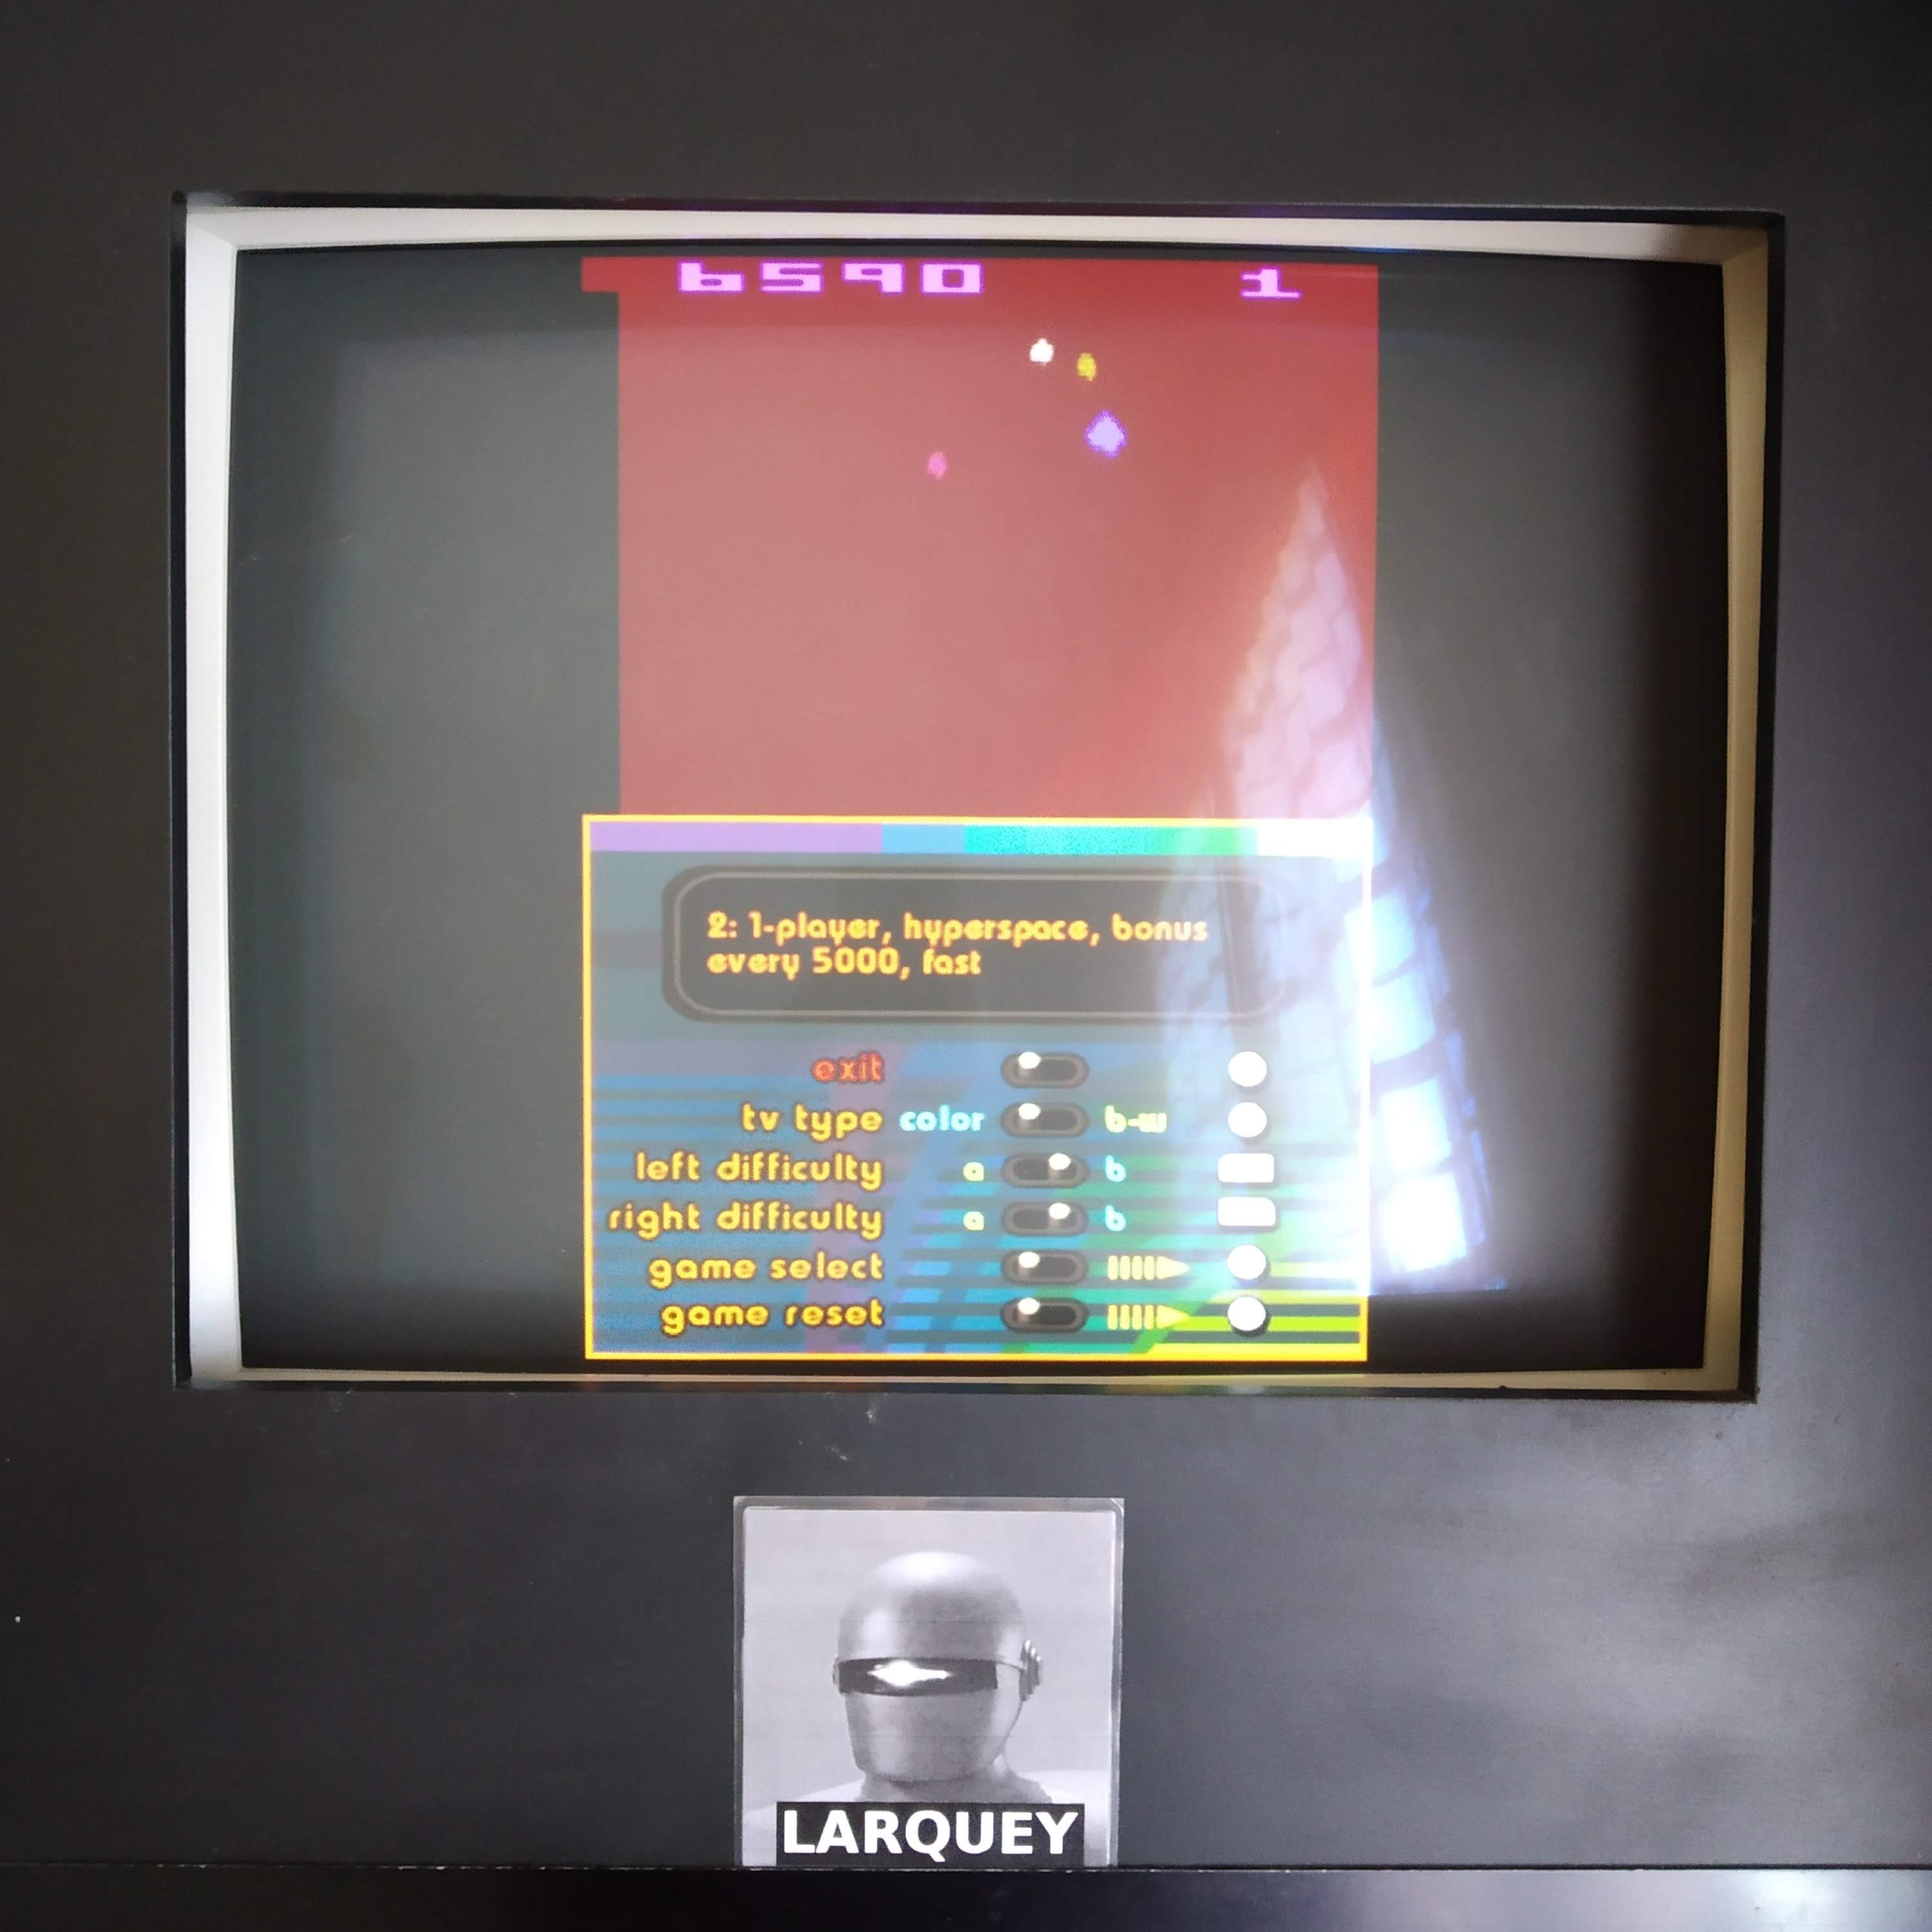 Larquey: Atari Greatest Hits: Volume 1: Asteroids: Game 2 [Atari 2600] (Nintendo DS Emulated) 6,590 points on 2020-05-03 05:46:06